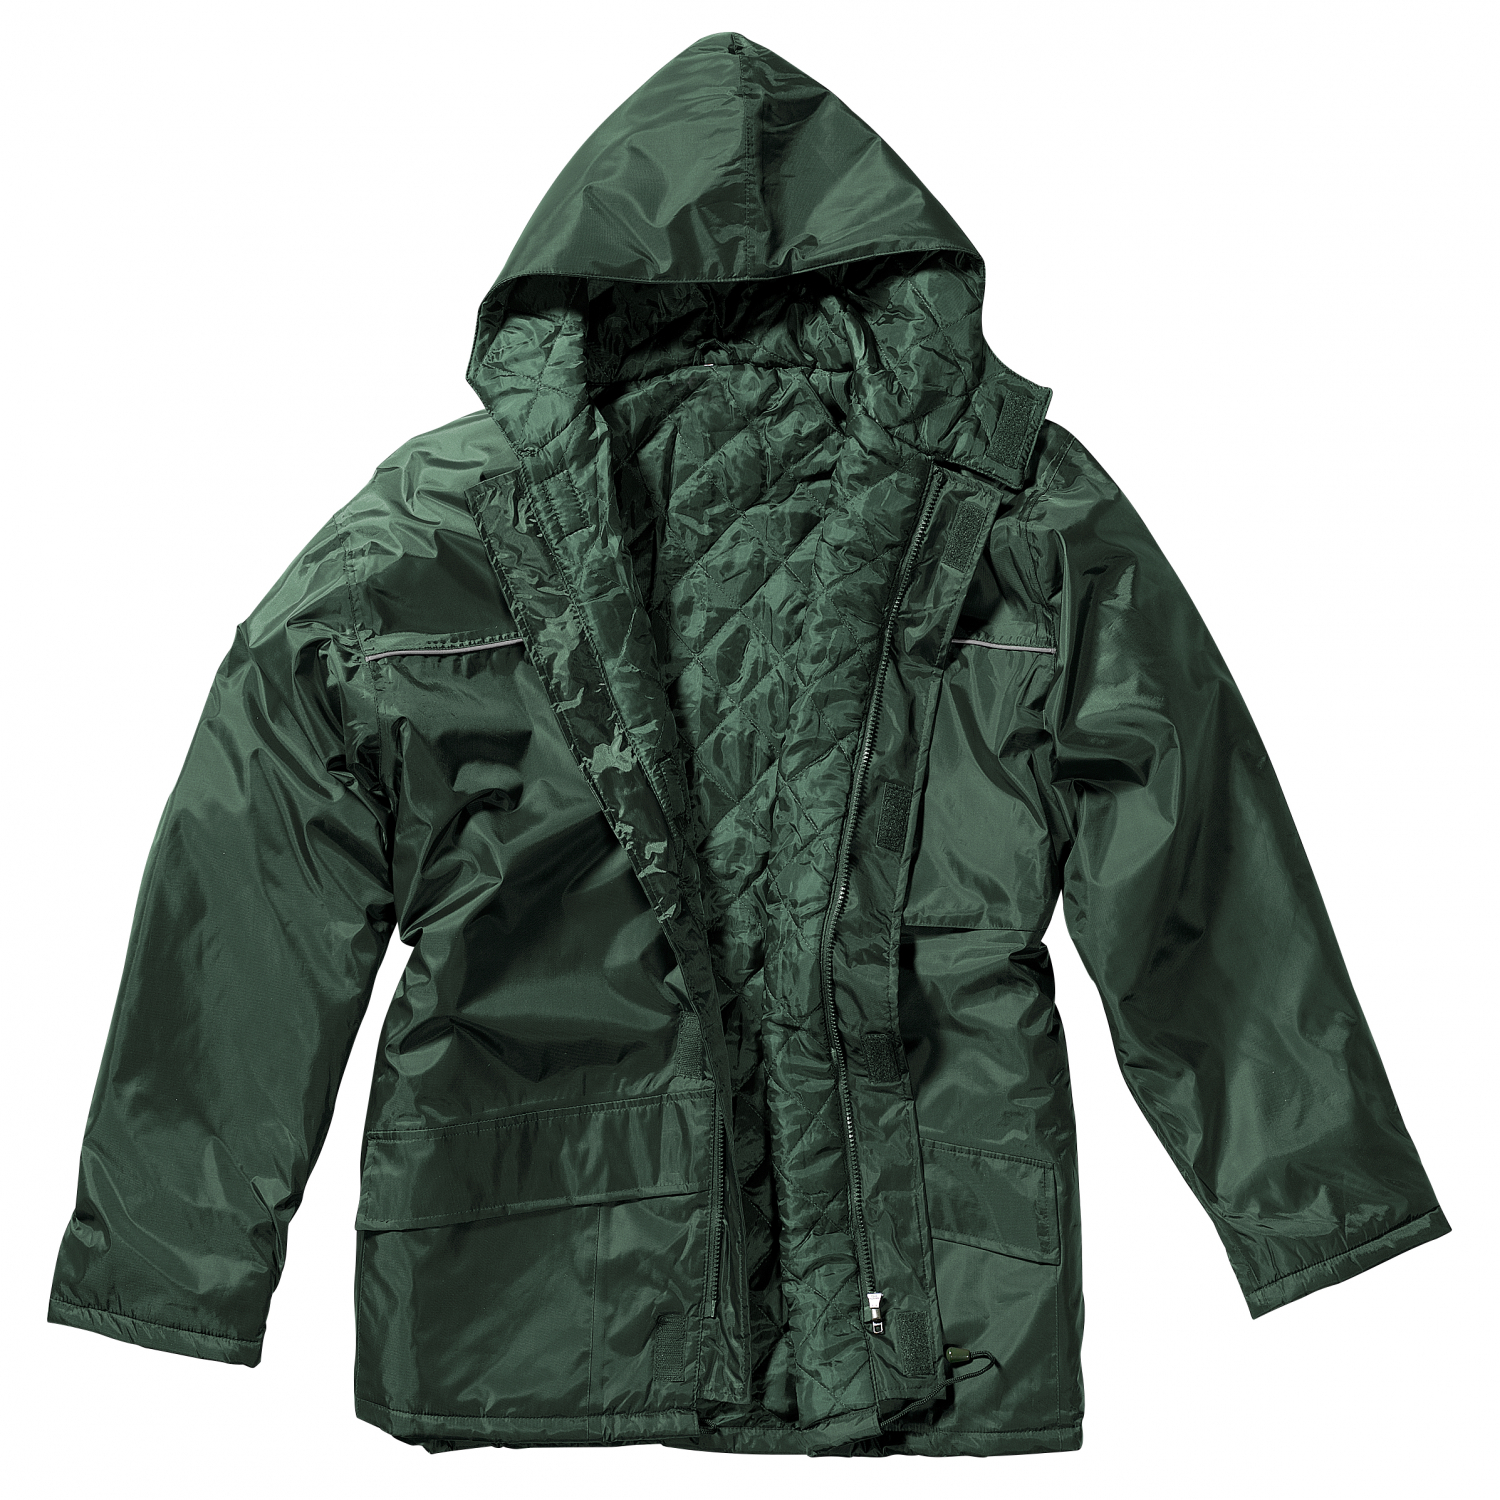 Men's Thermal Rainwear Jacket (with reflective stripe) Sz. 39 